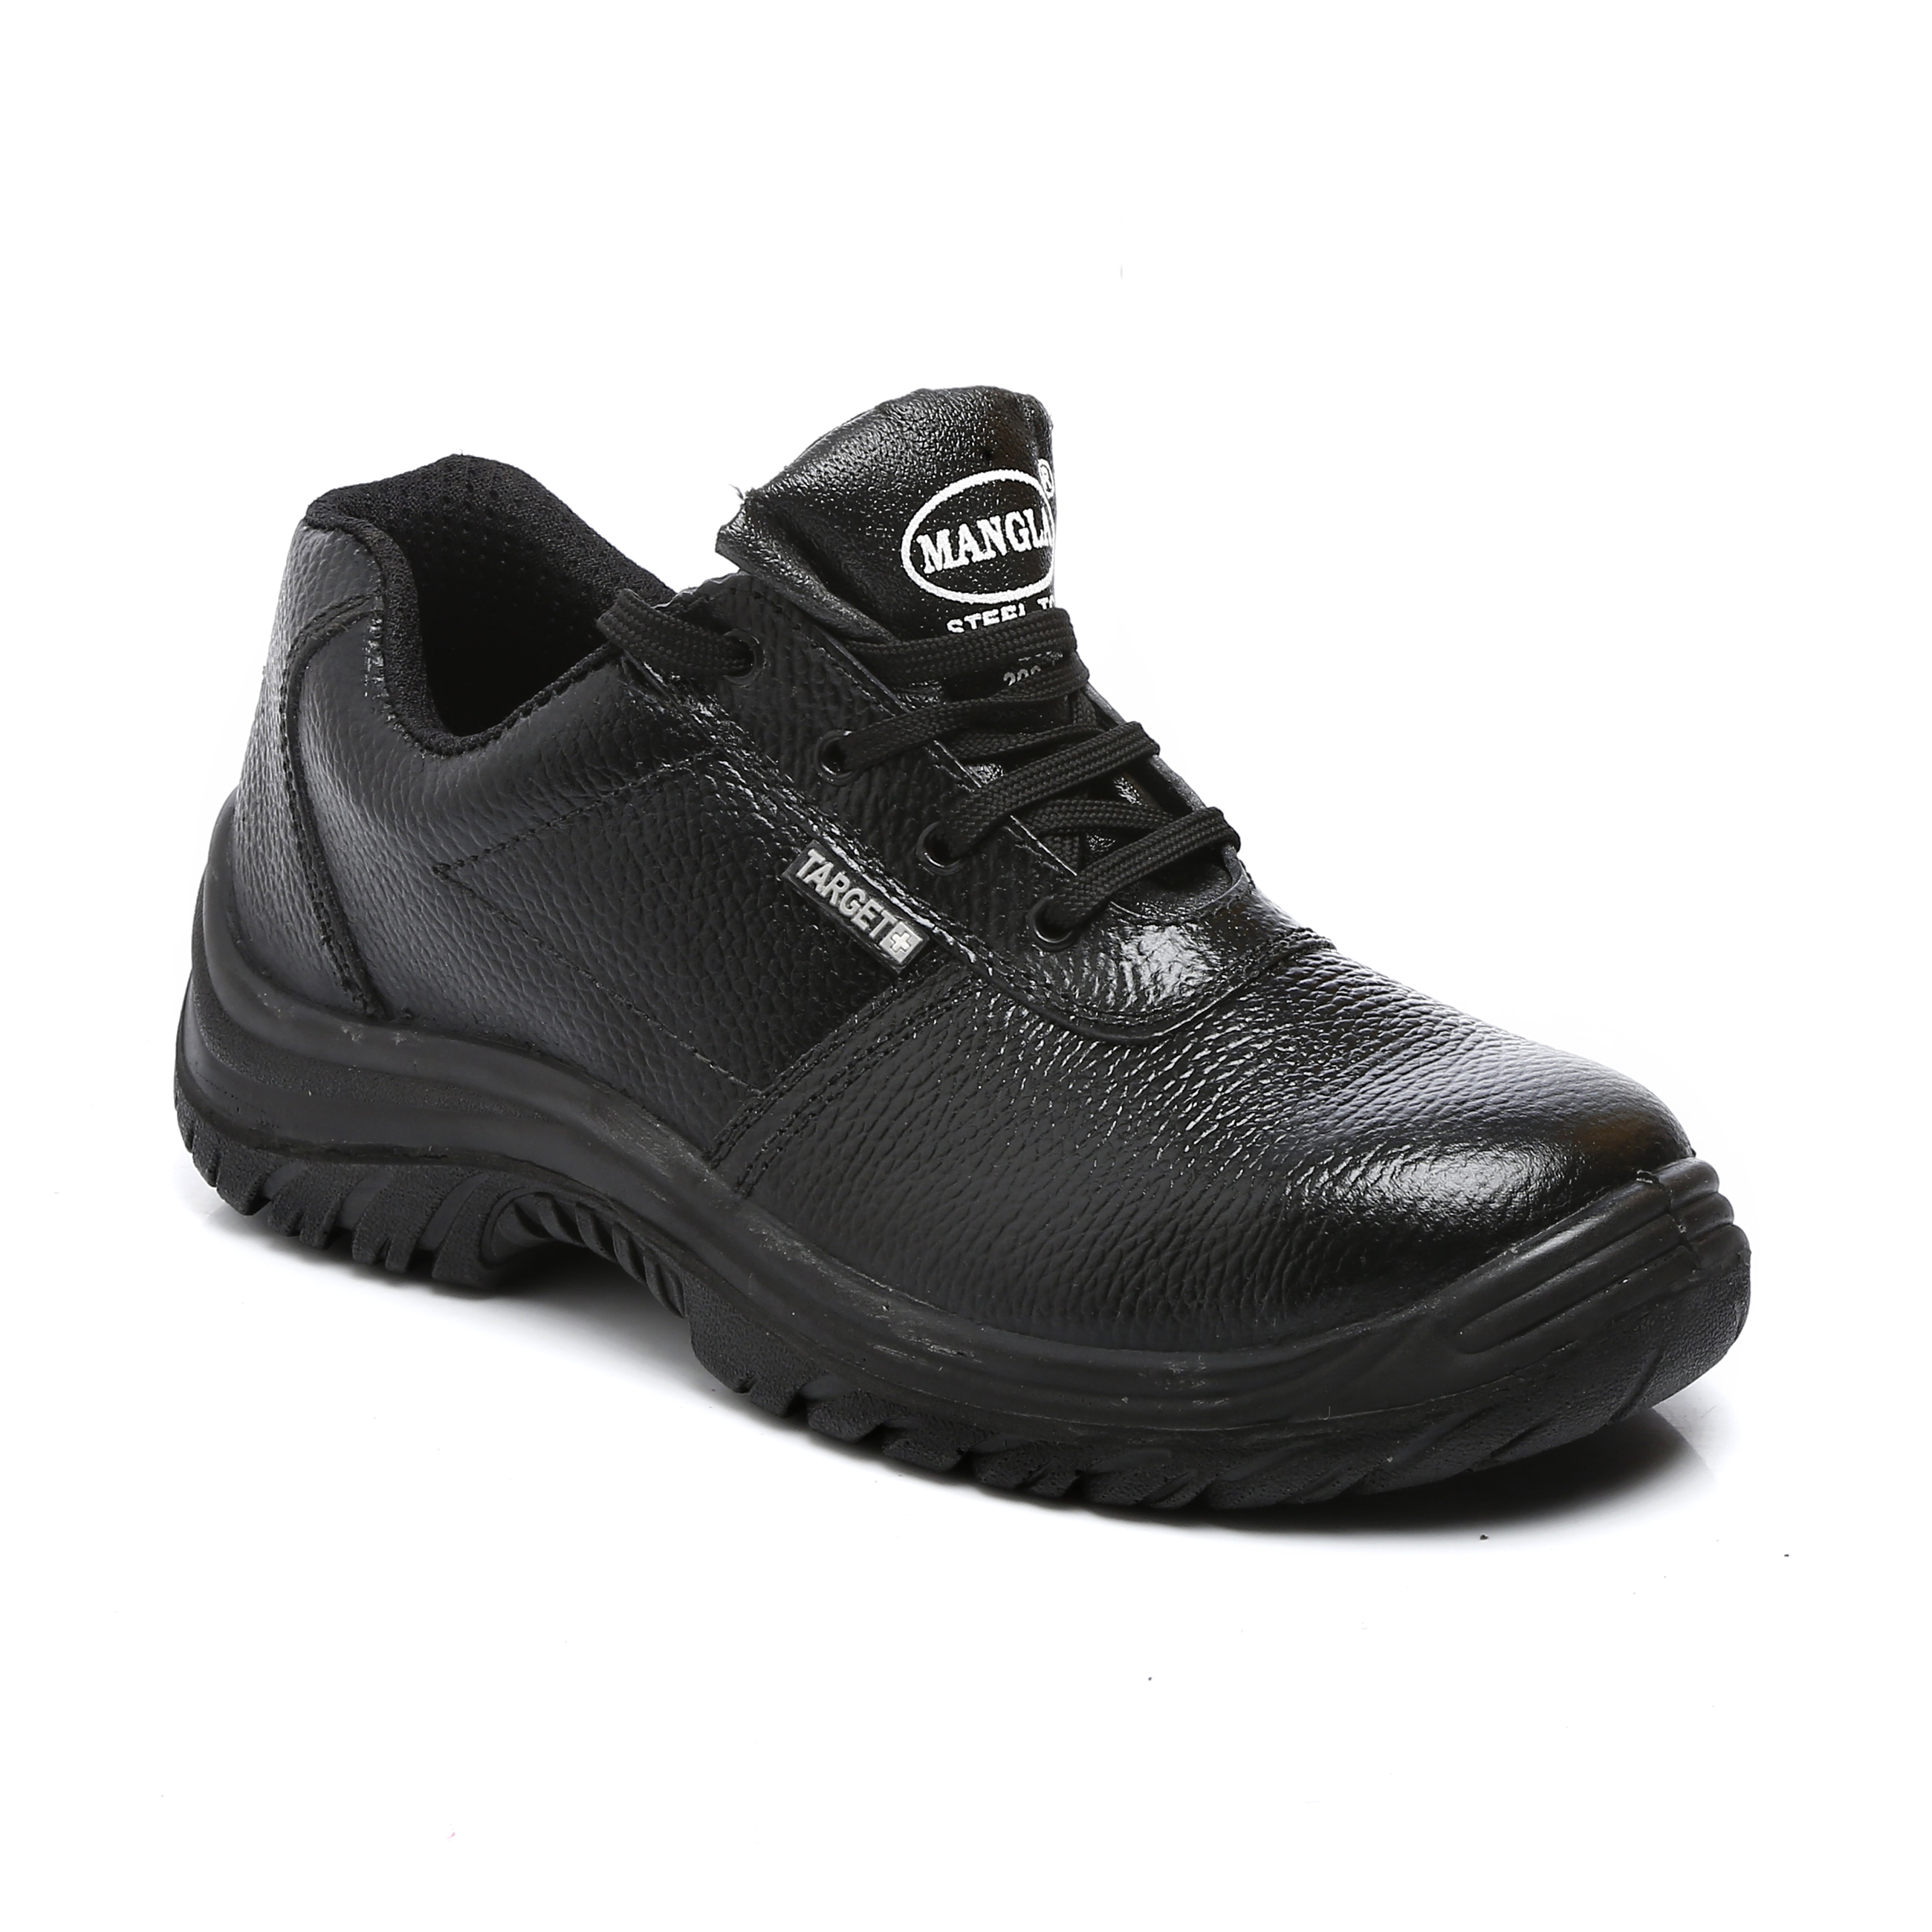 Bis Marked Safety Shoe